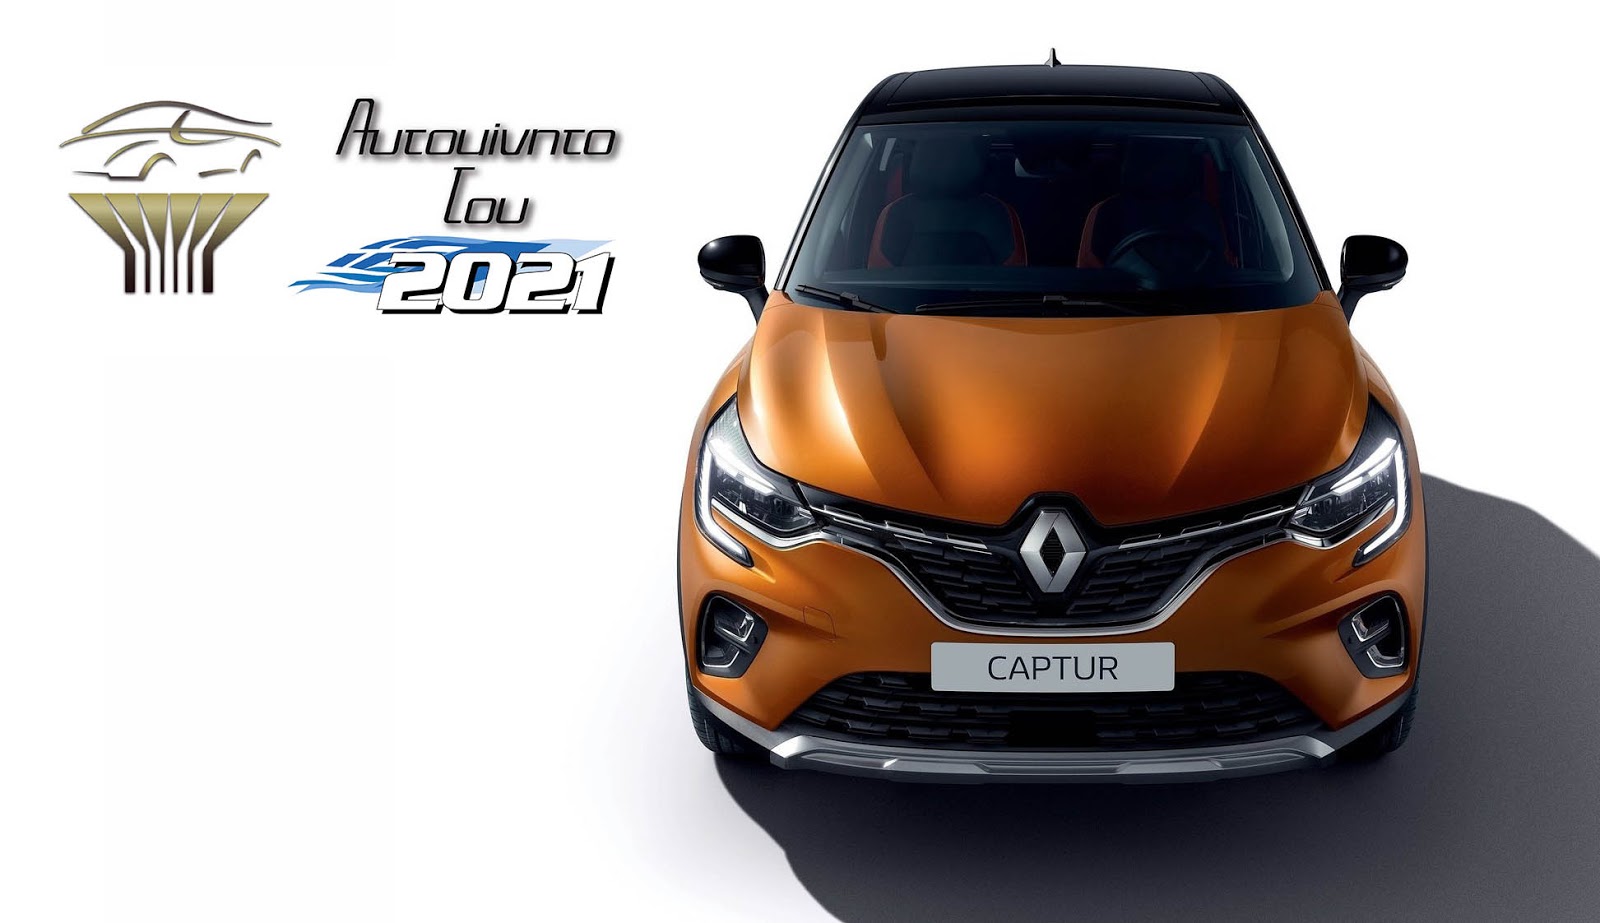 RENAULT2BCAPTUR2B25CE259125CE25A525CE25A425CE259F25CE259A25CE259925CE259D25CE259725CE25A425CE259F2B25CE25A425CE259F25CE25A52B20212B252812529 Το Renault Captur, Αυτοκίνητο του 2021 για την Ελλάδα